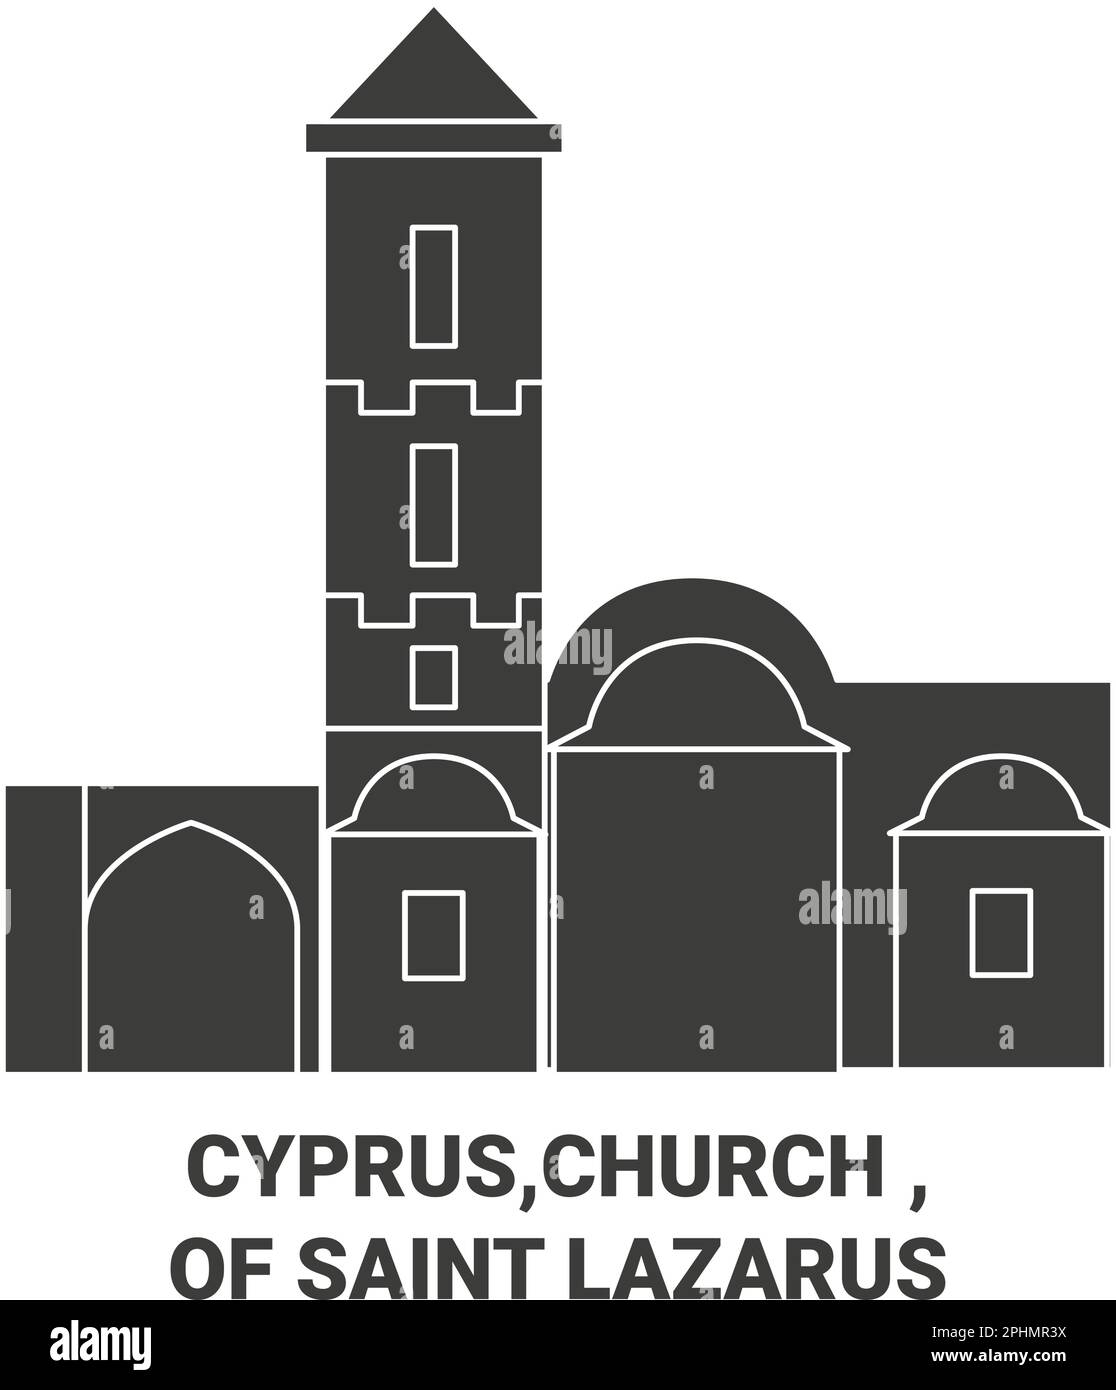 Cyprus, Church Of Saint Lazarus travel landmark vector illustration Stock Vector